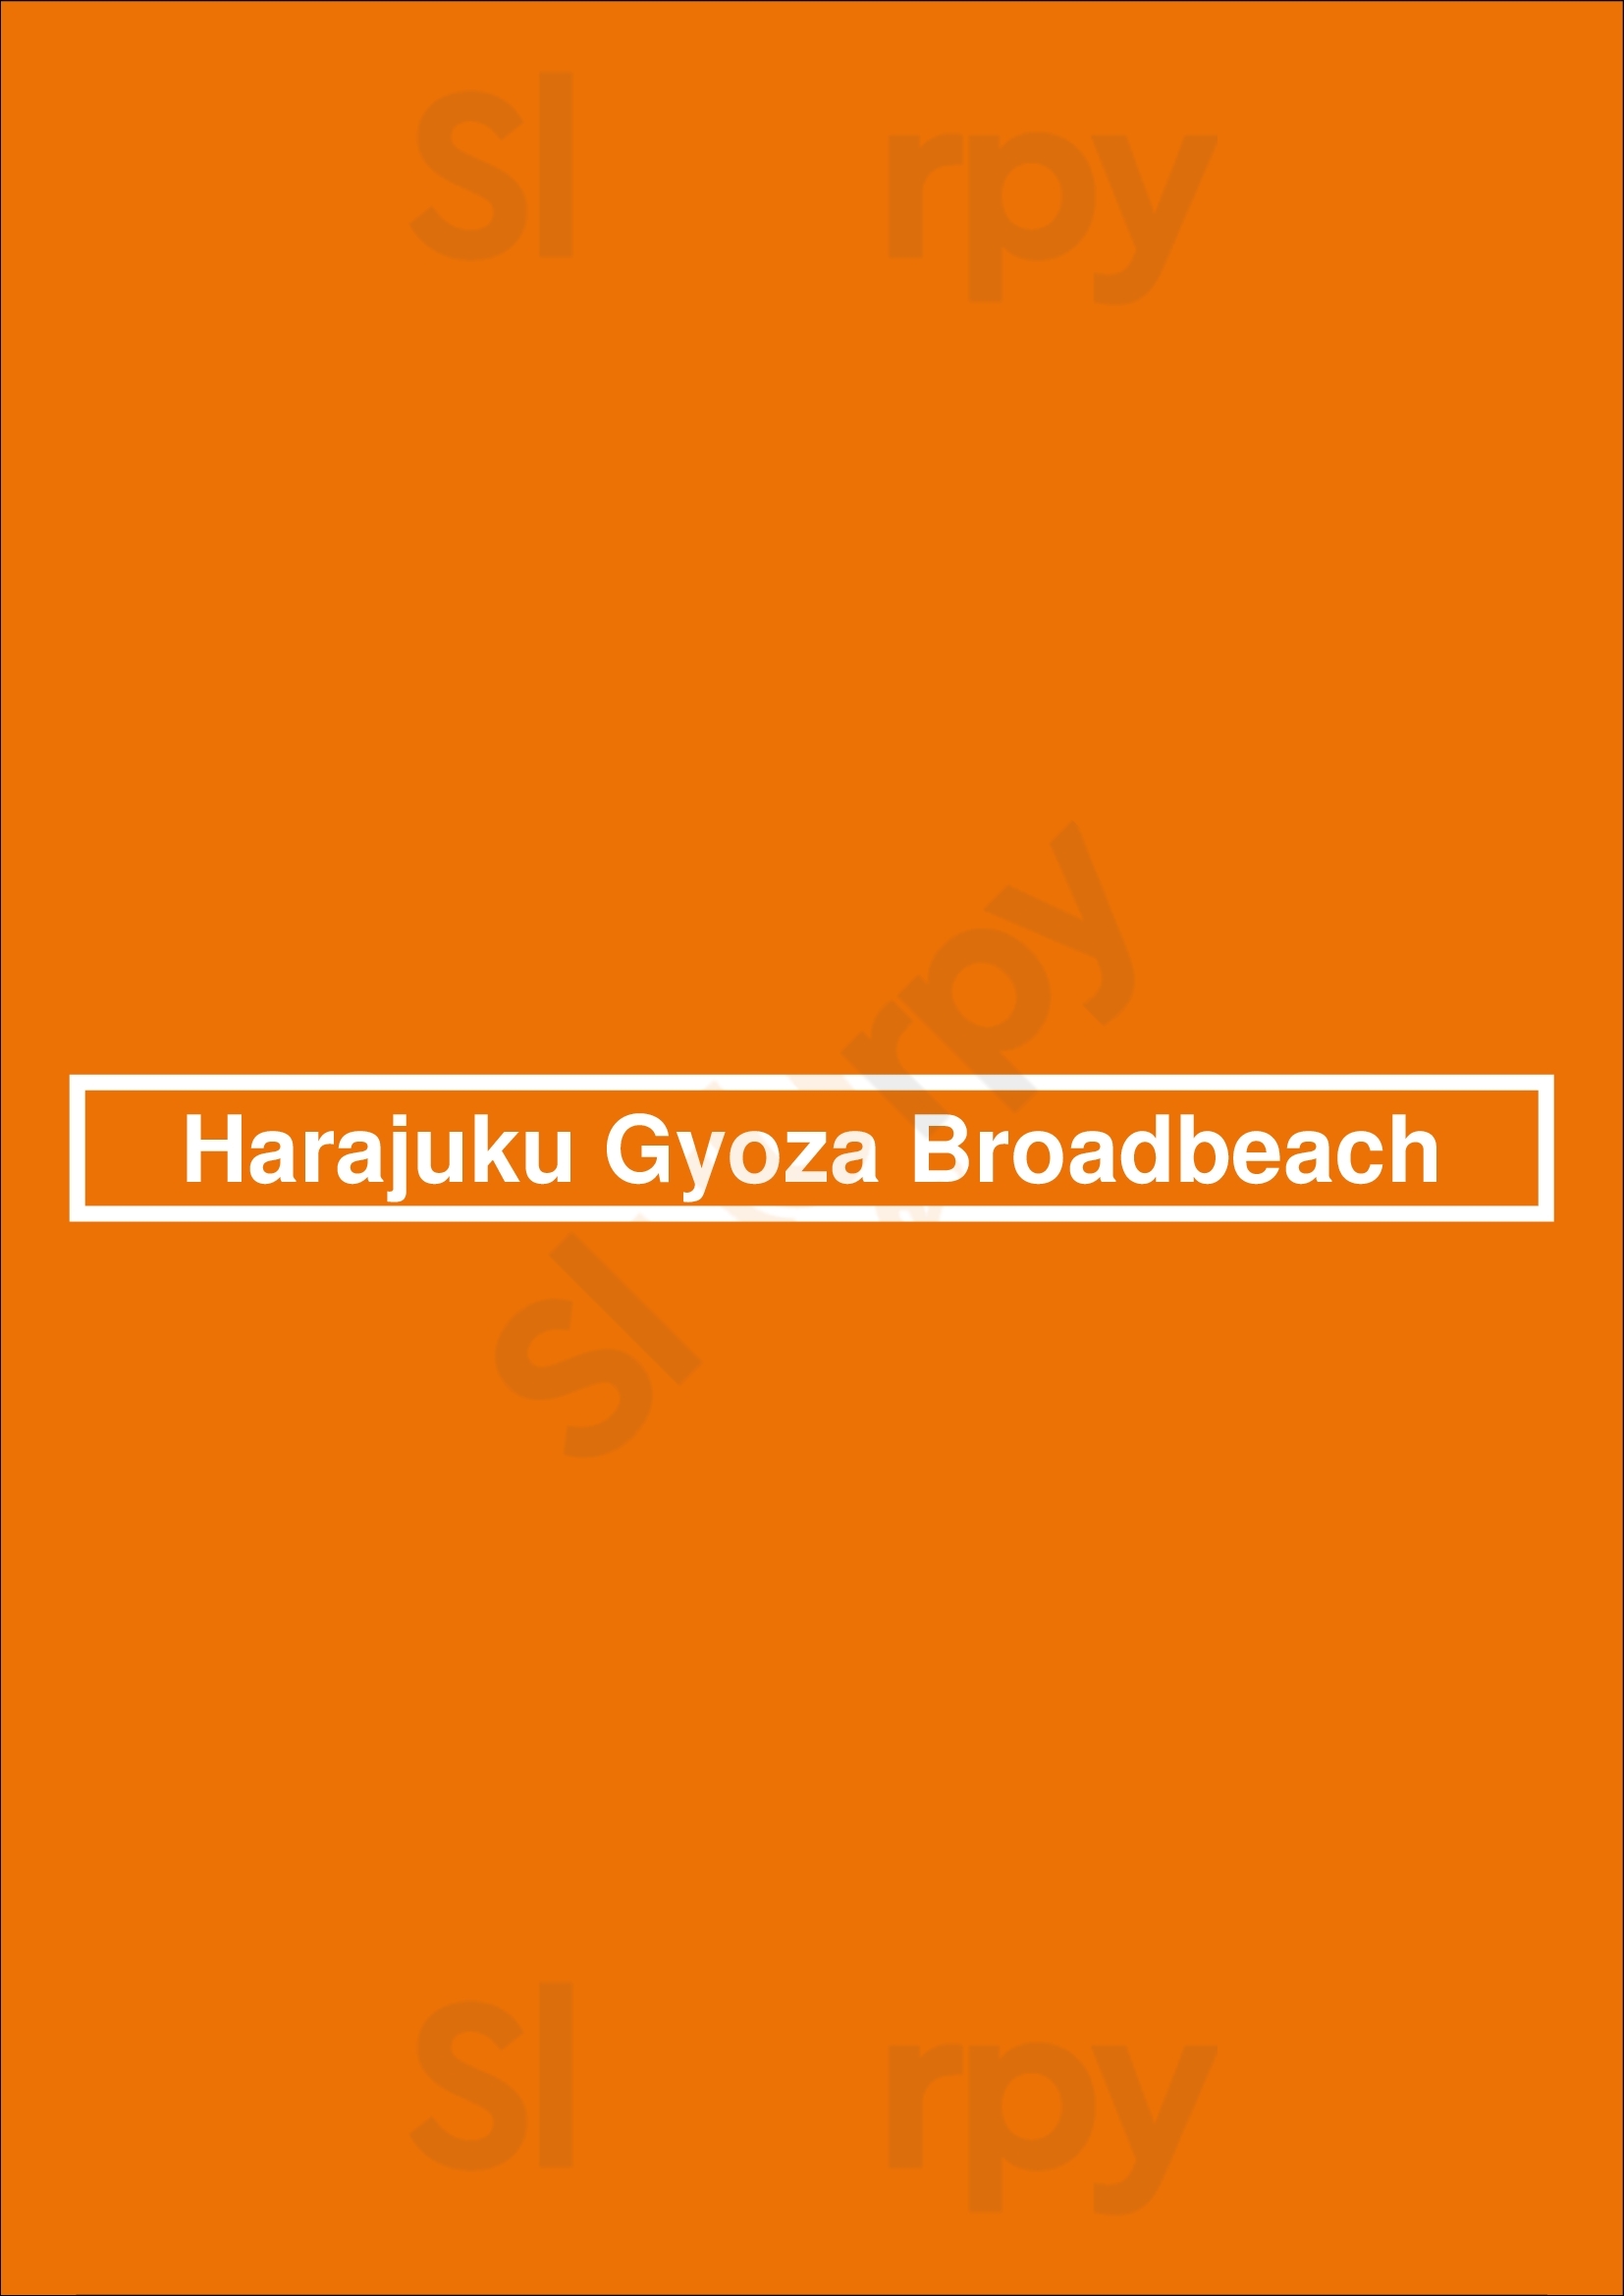 Harajuku Gyoza Broadbeach Broadbeach Menu - 1